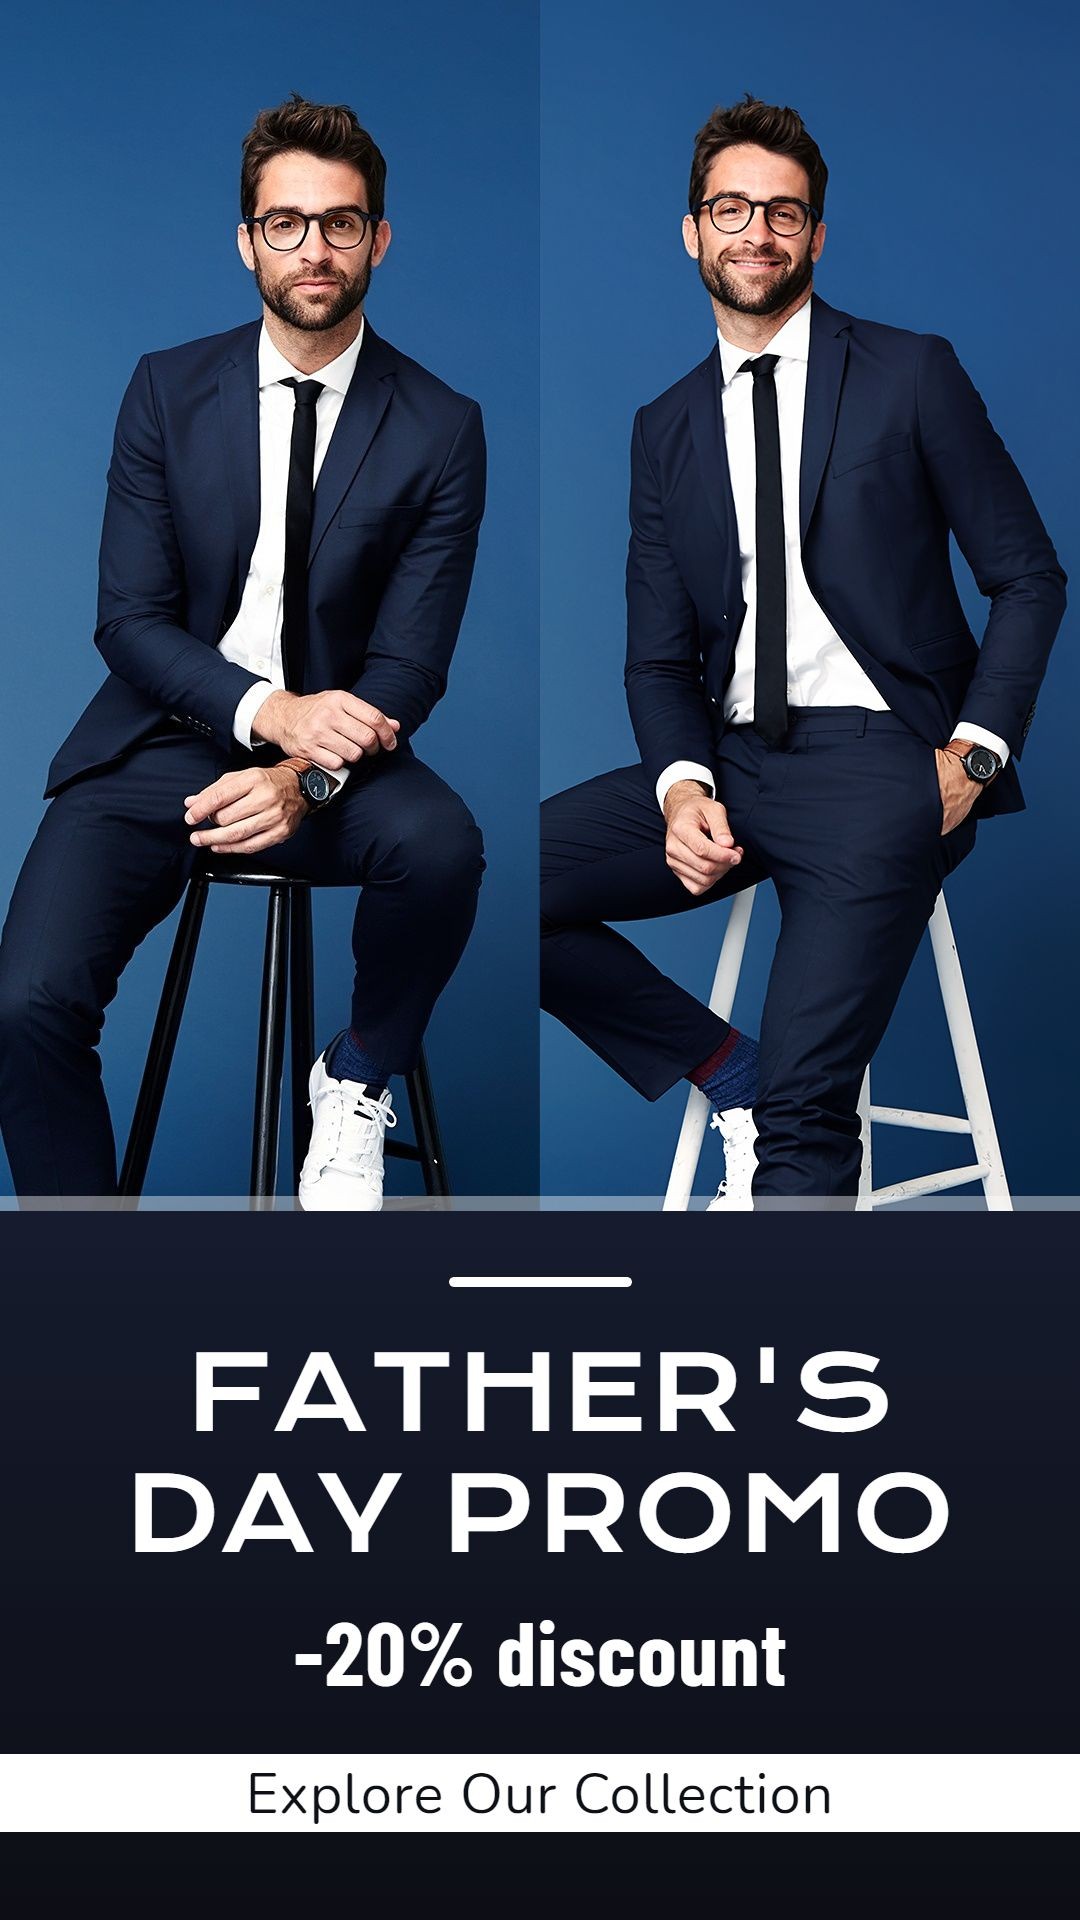 Suit Smile Man Father's Day Men's Suit Formal Wear Fashion Discount Sale Promo Ecommerce Story